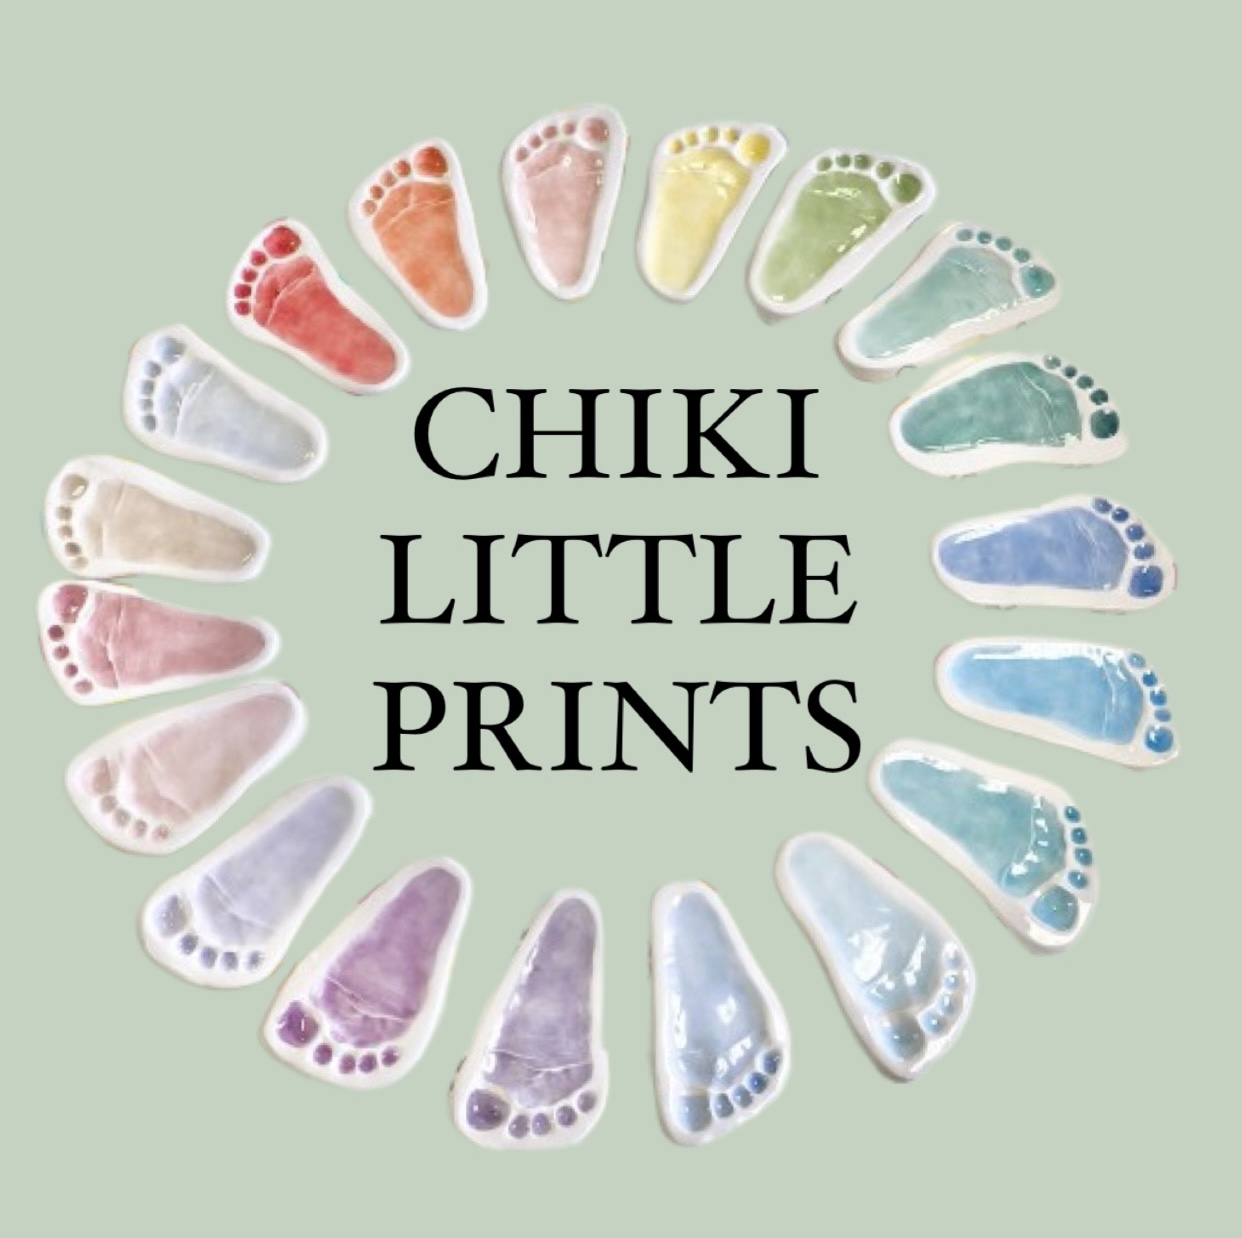 Chiki Little Prints's logo